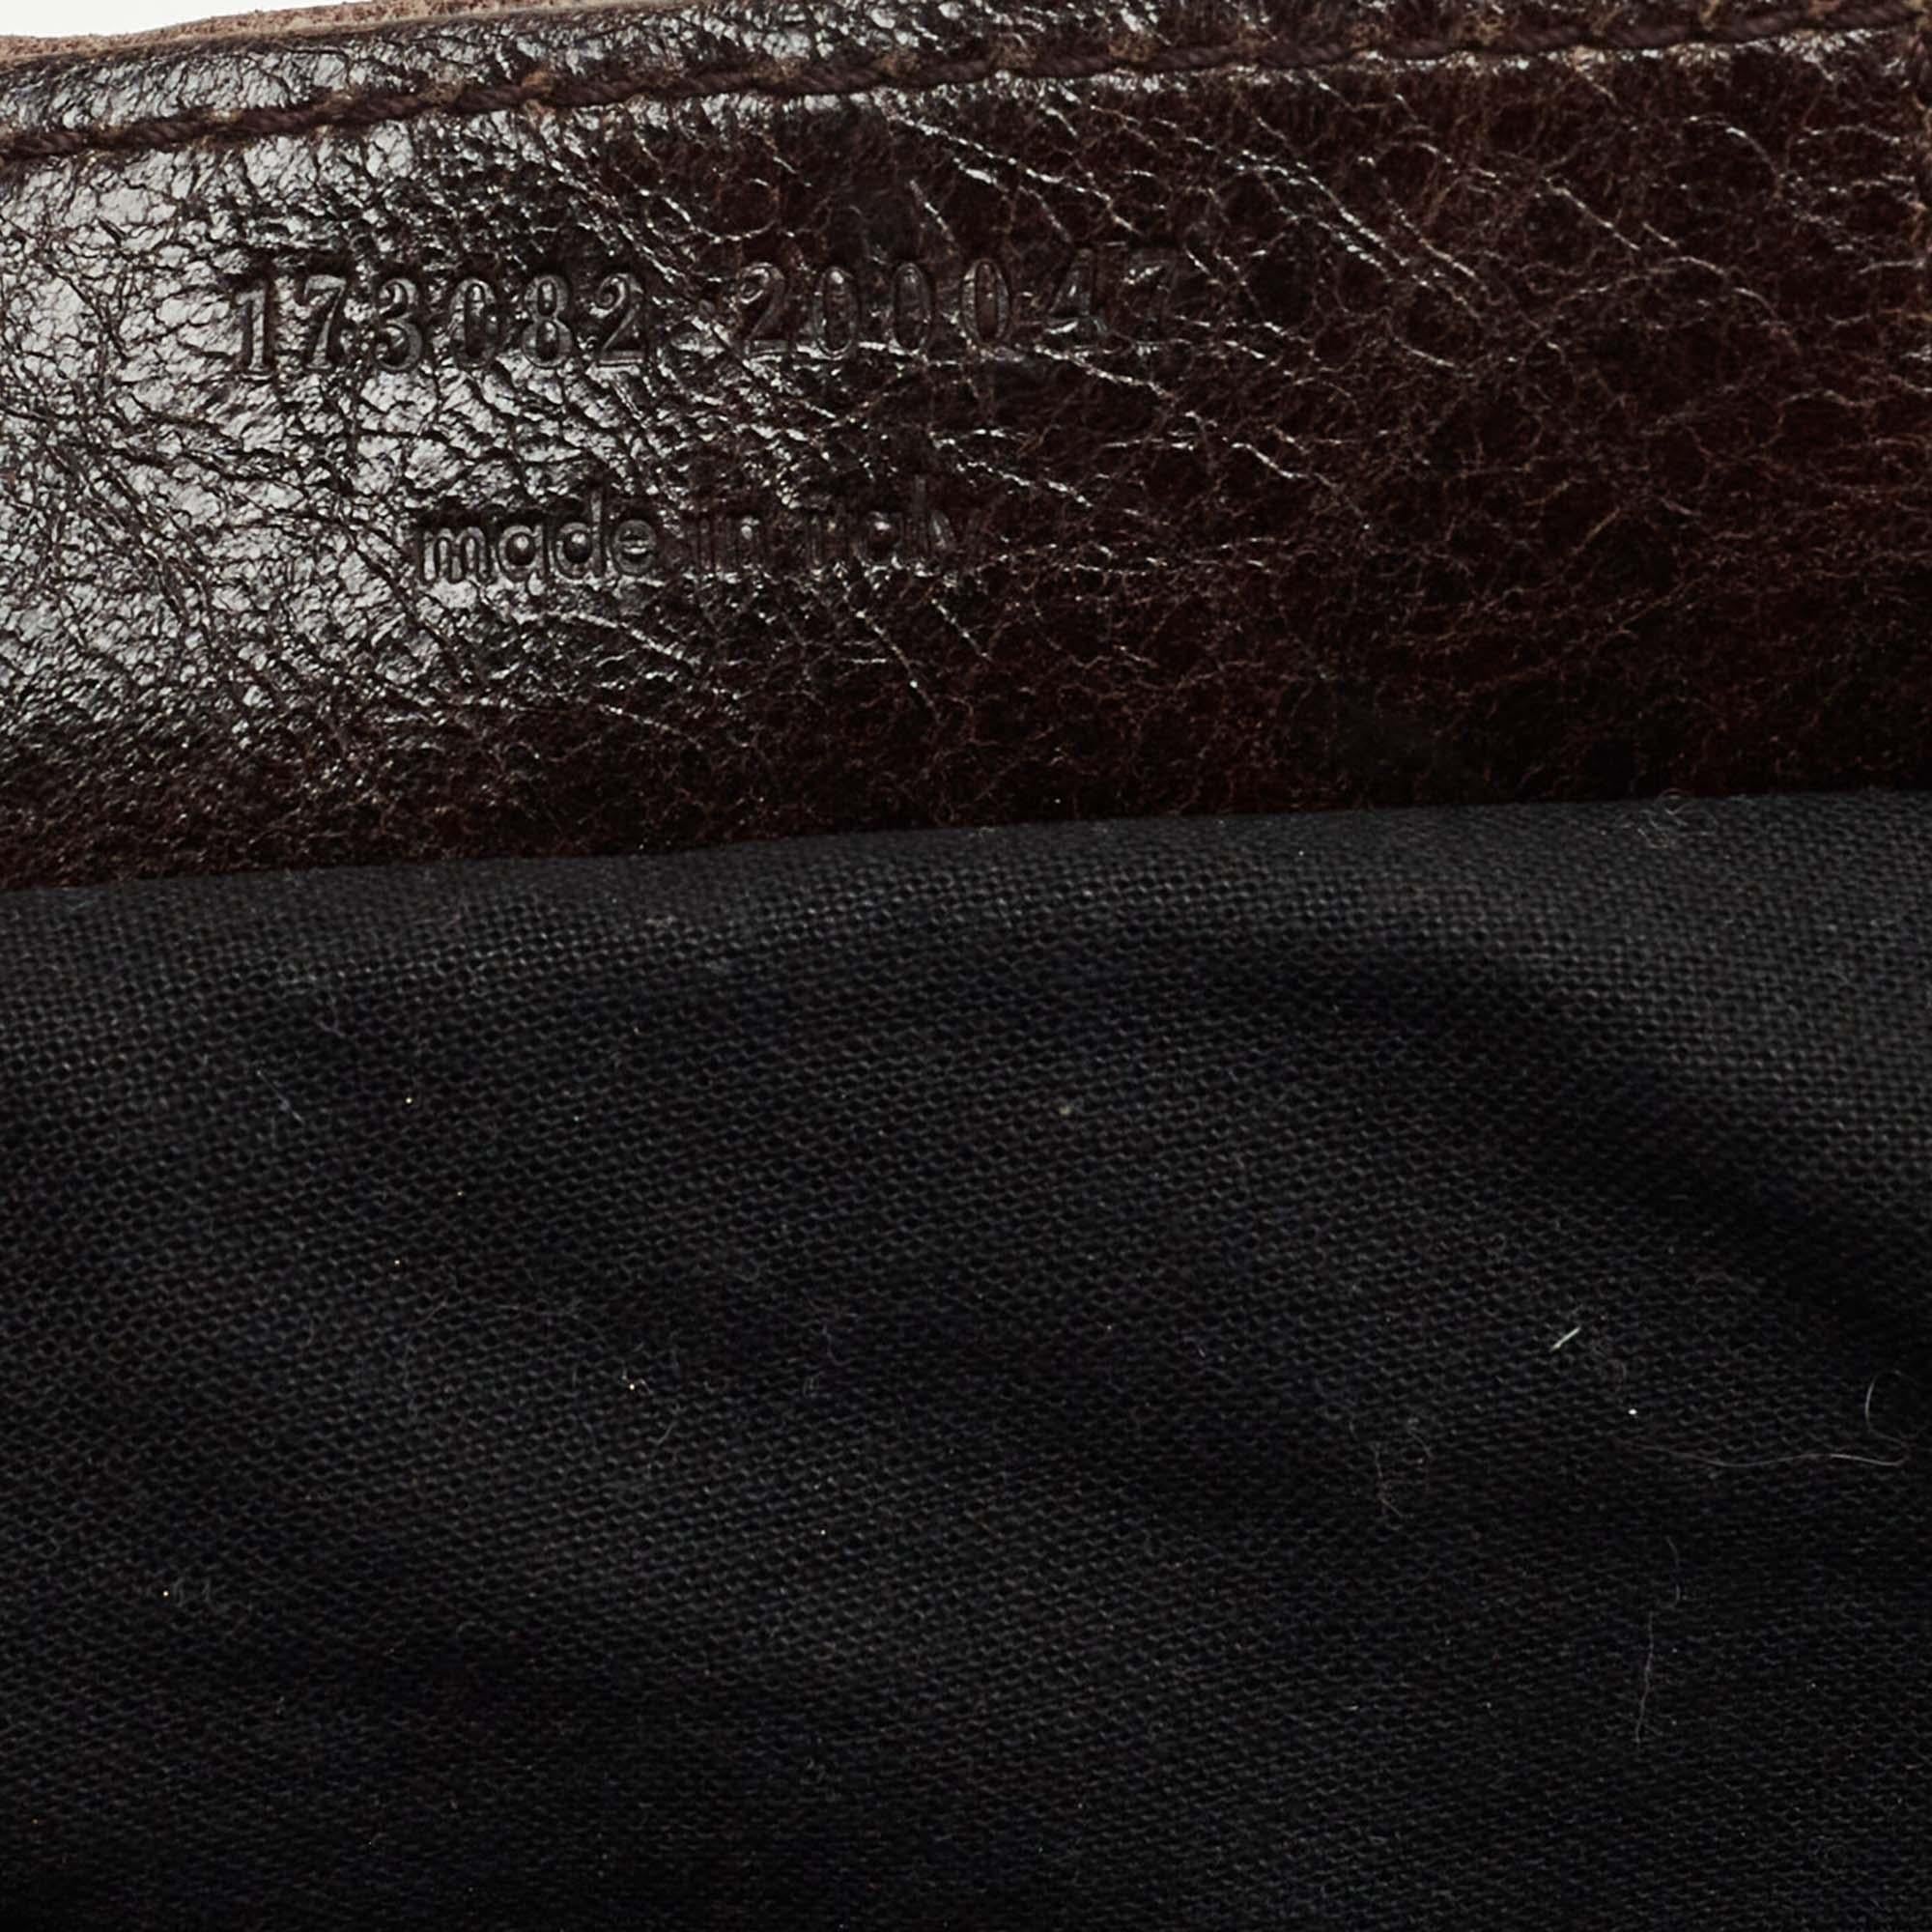 Balenciaga Dark Brown Leather GGH Part Time Tote 11